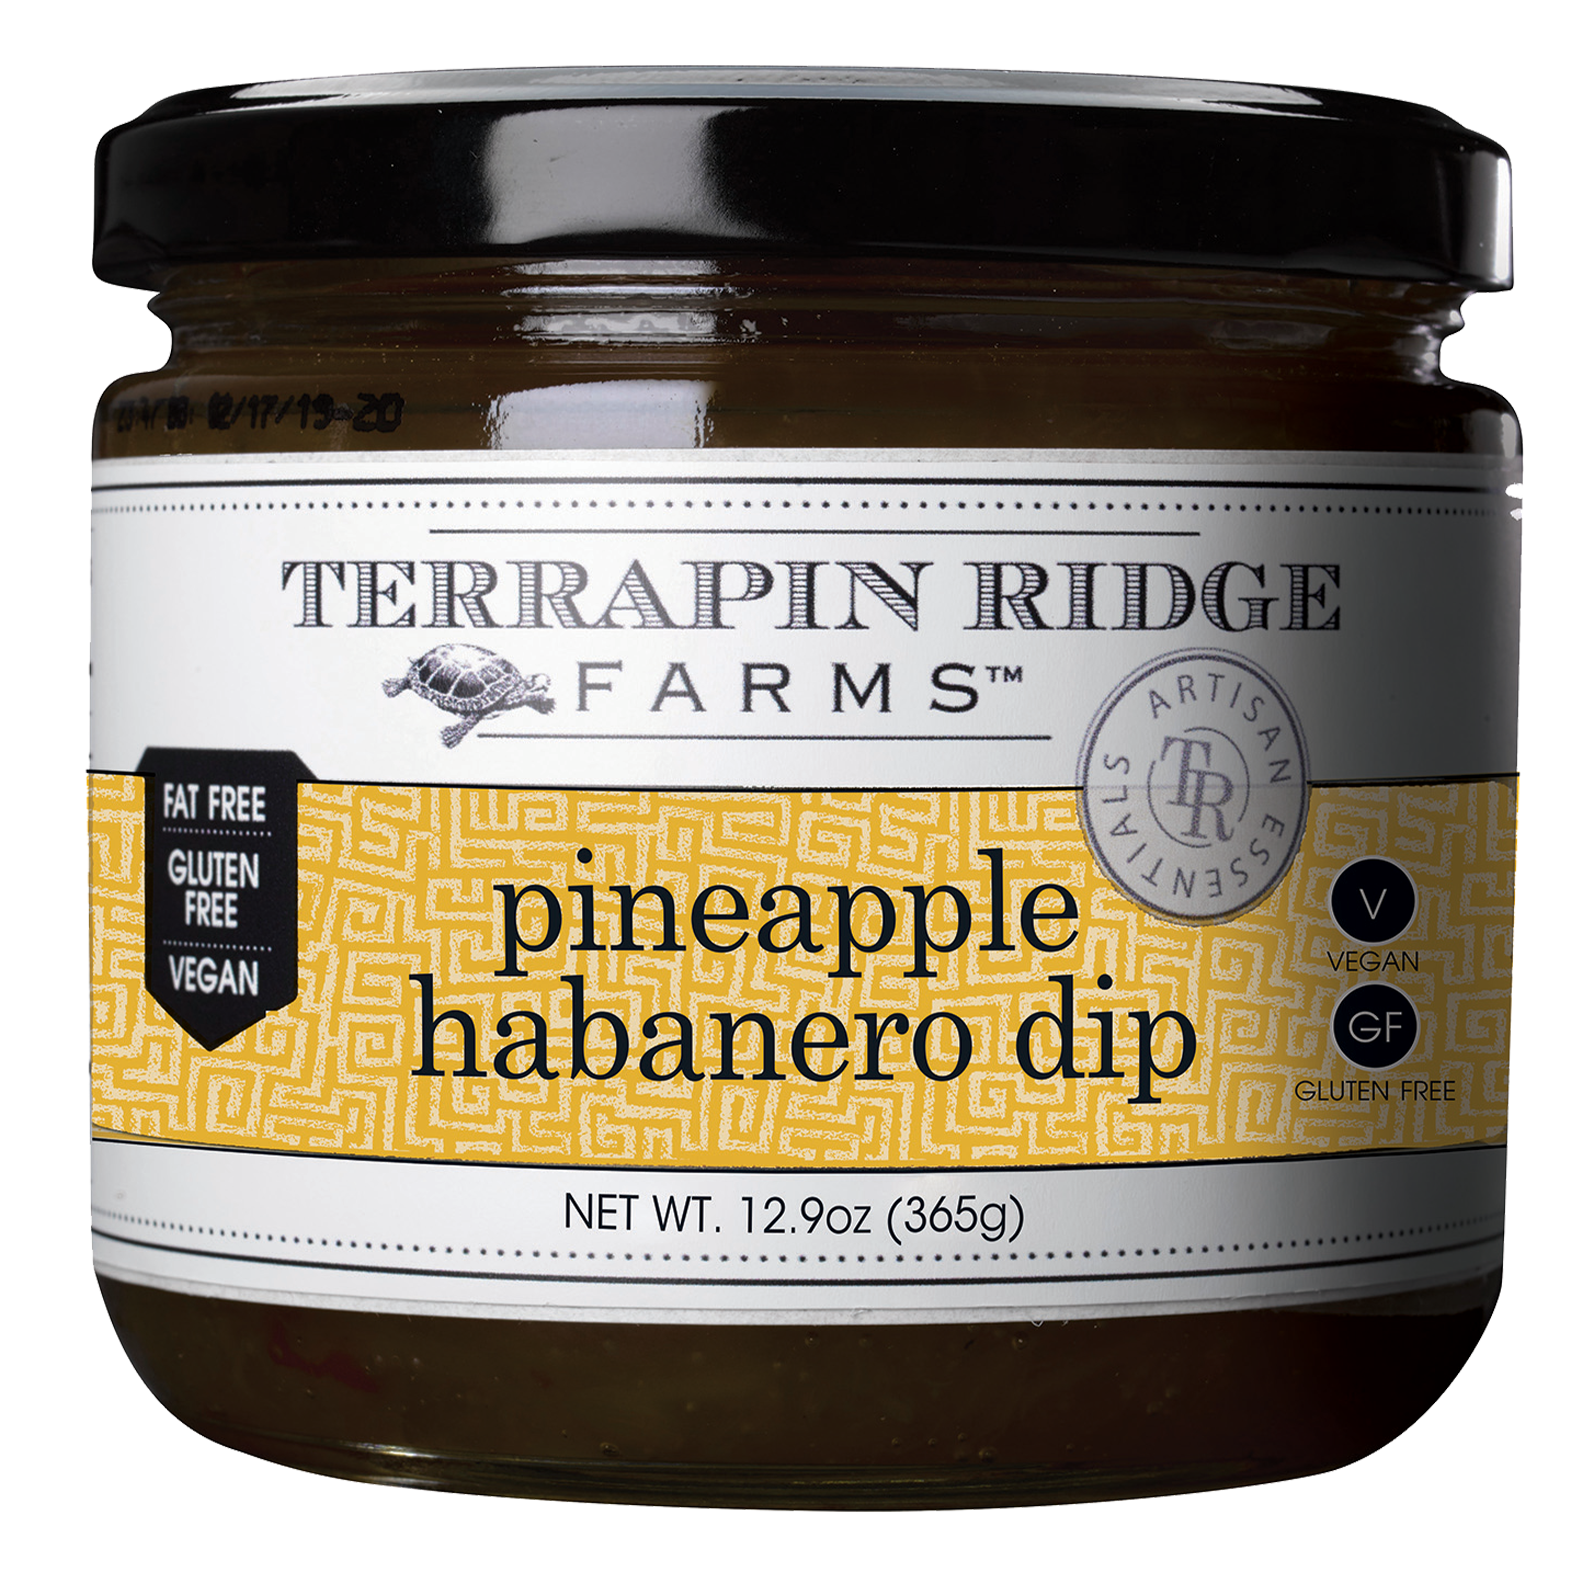 Pineapple Habanero Dip